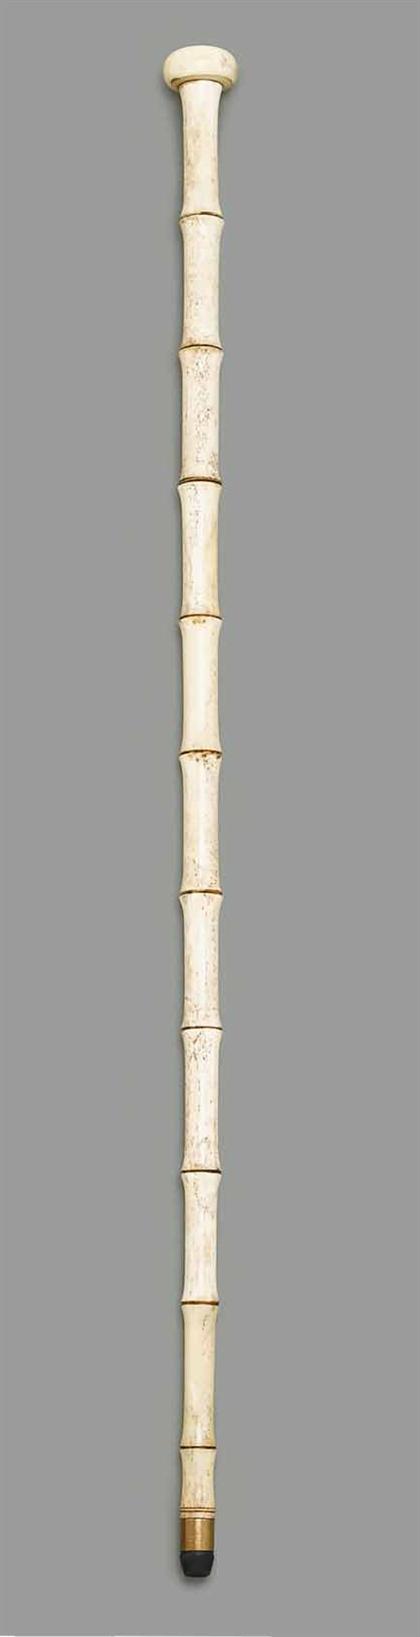 Bone walking stick 19th century 4941f